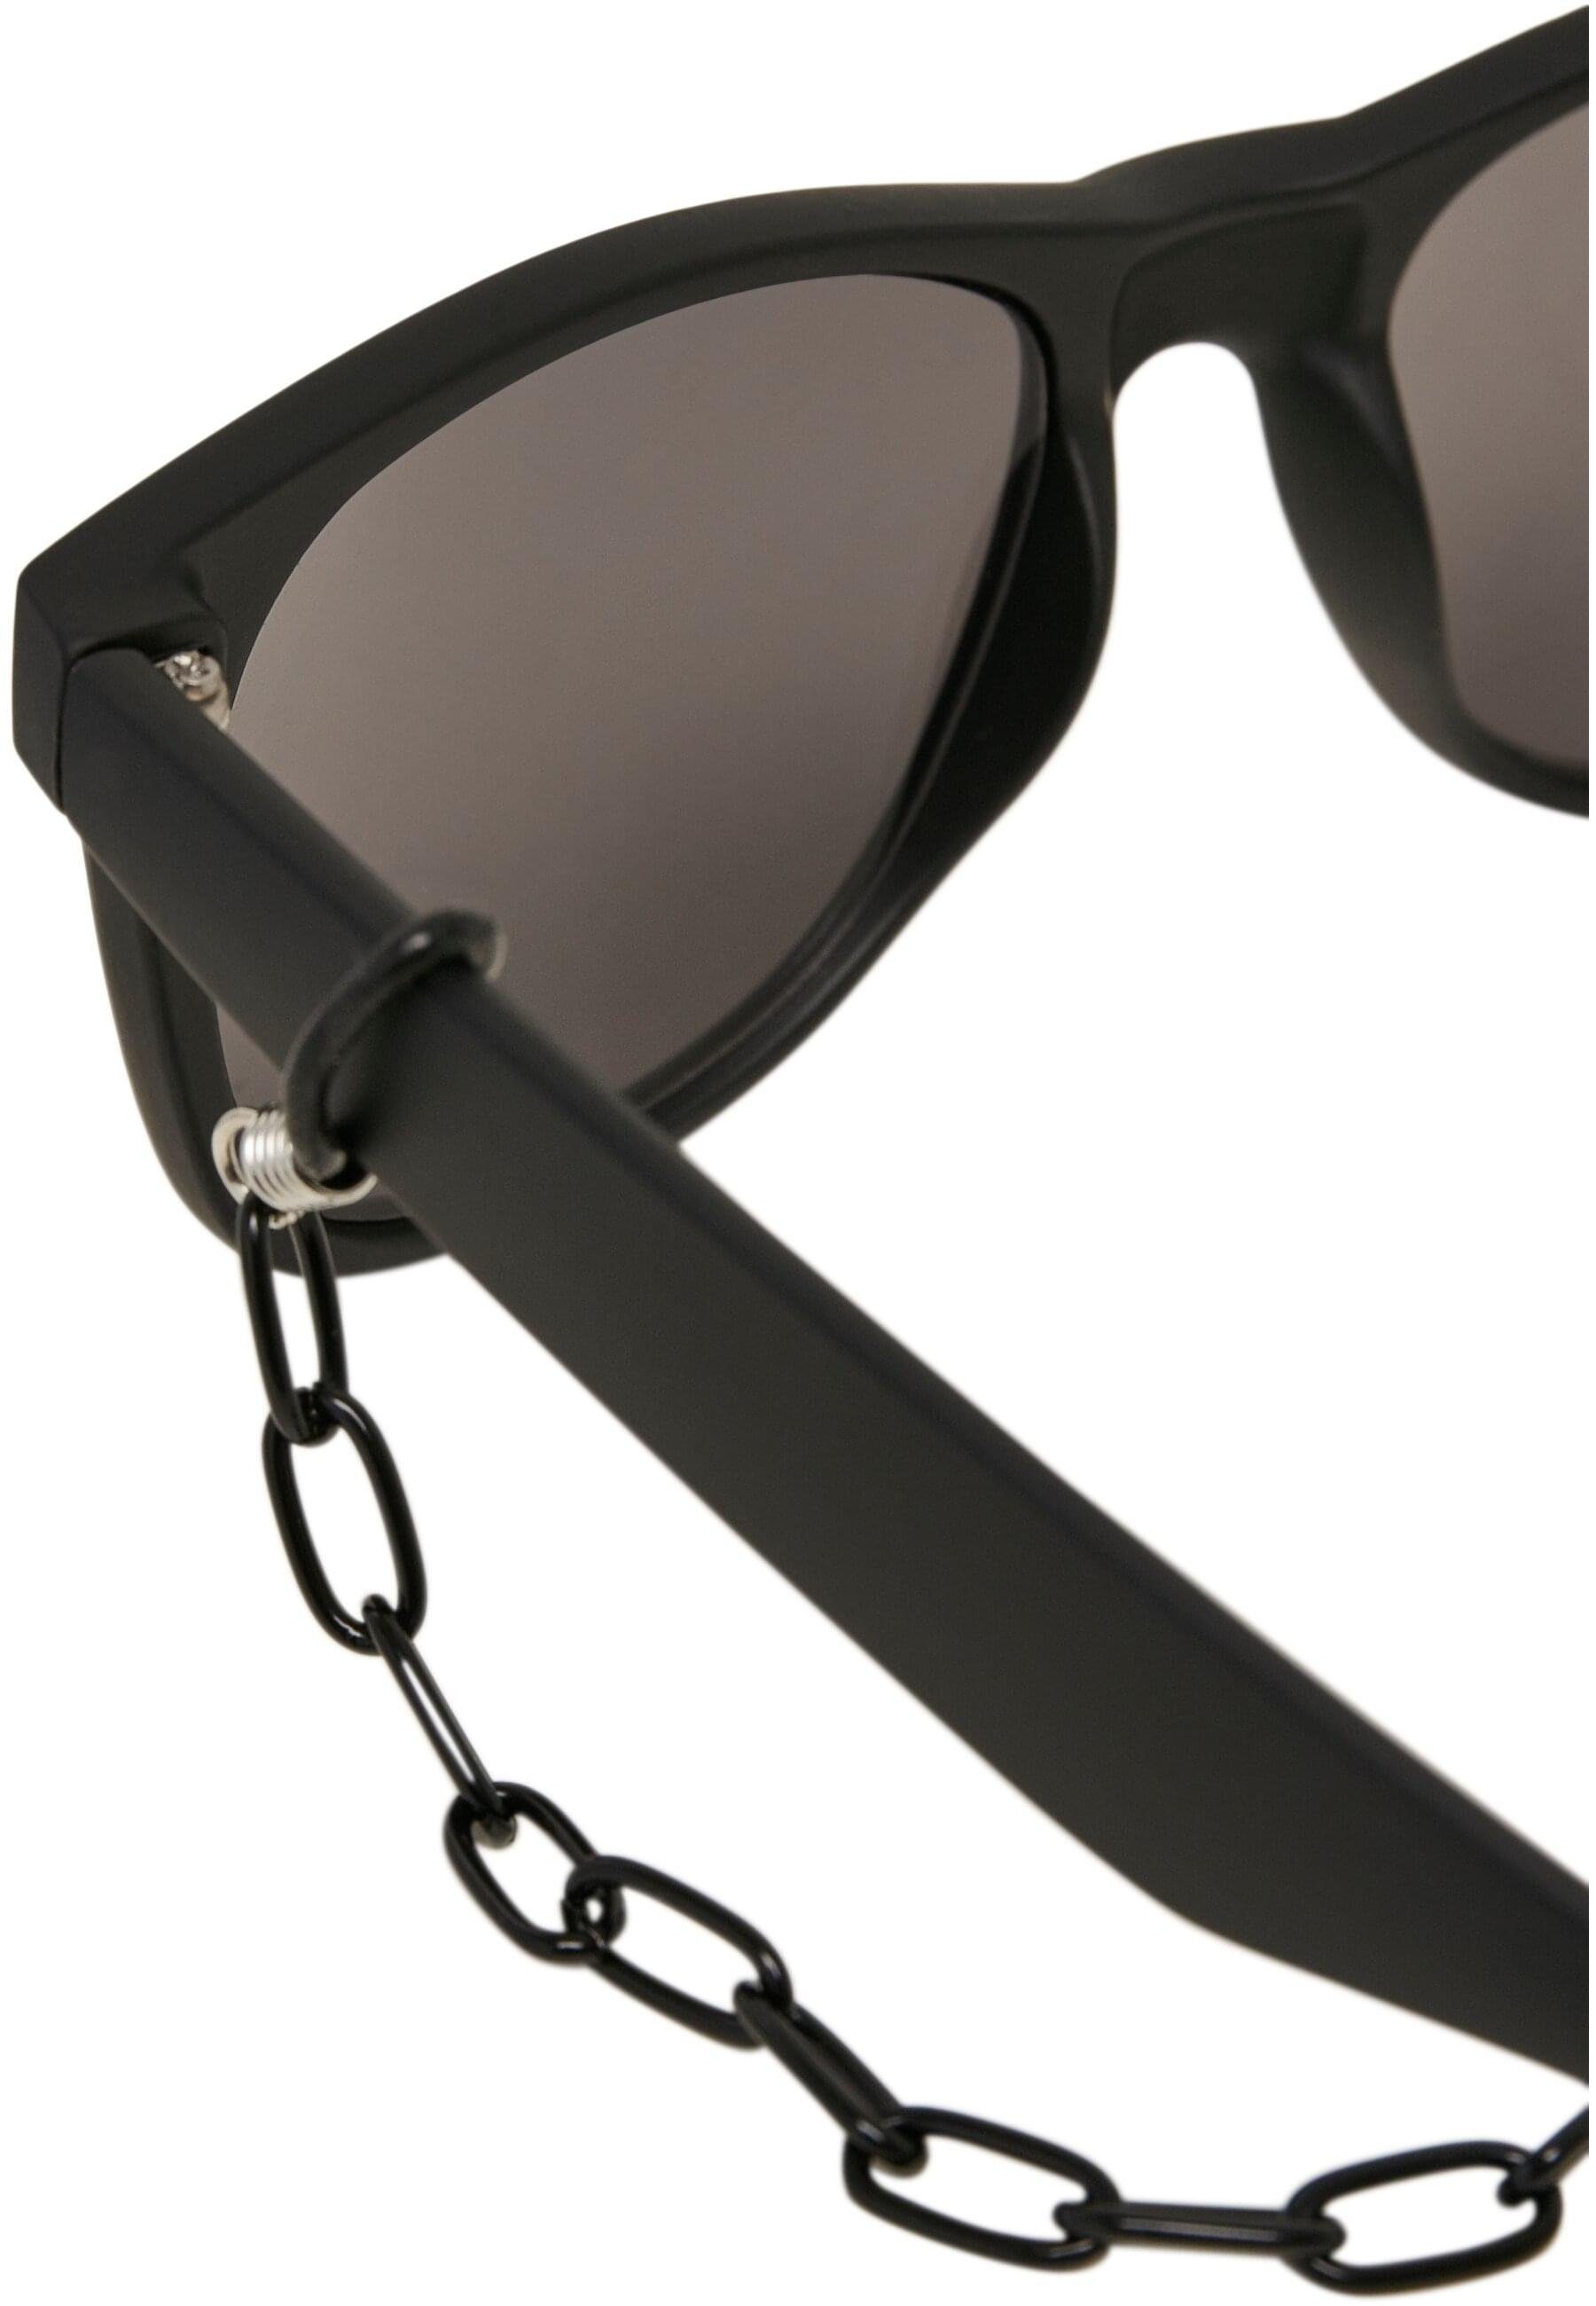 Likoma Mirror Sonnenbrille CLASSICS With Chain URBAN Sunglasses Unisex